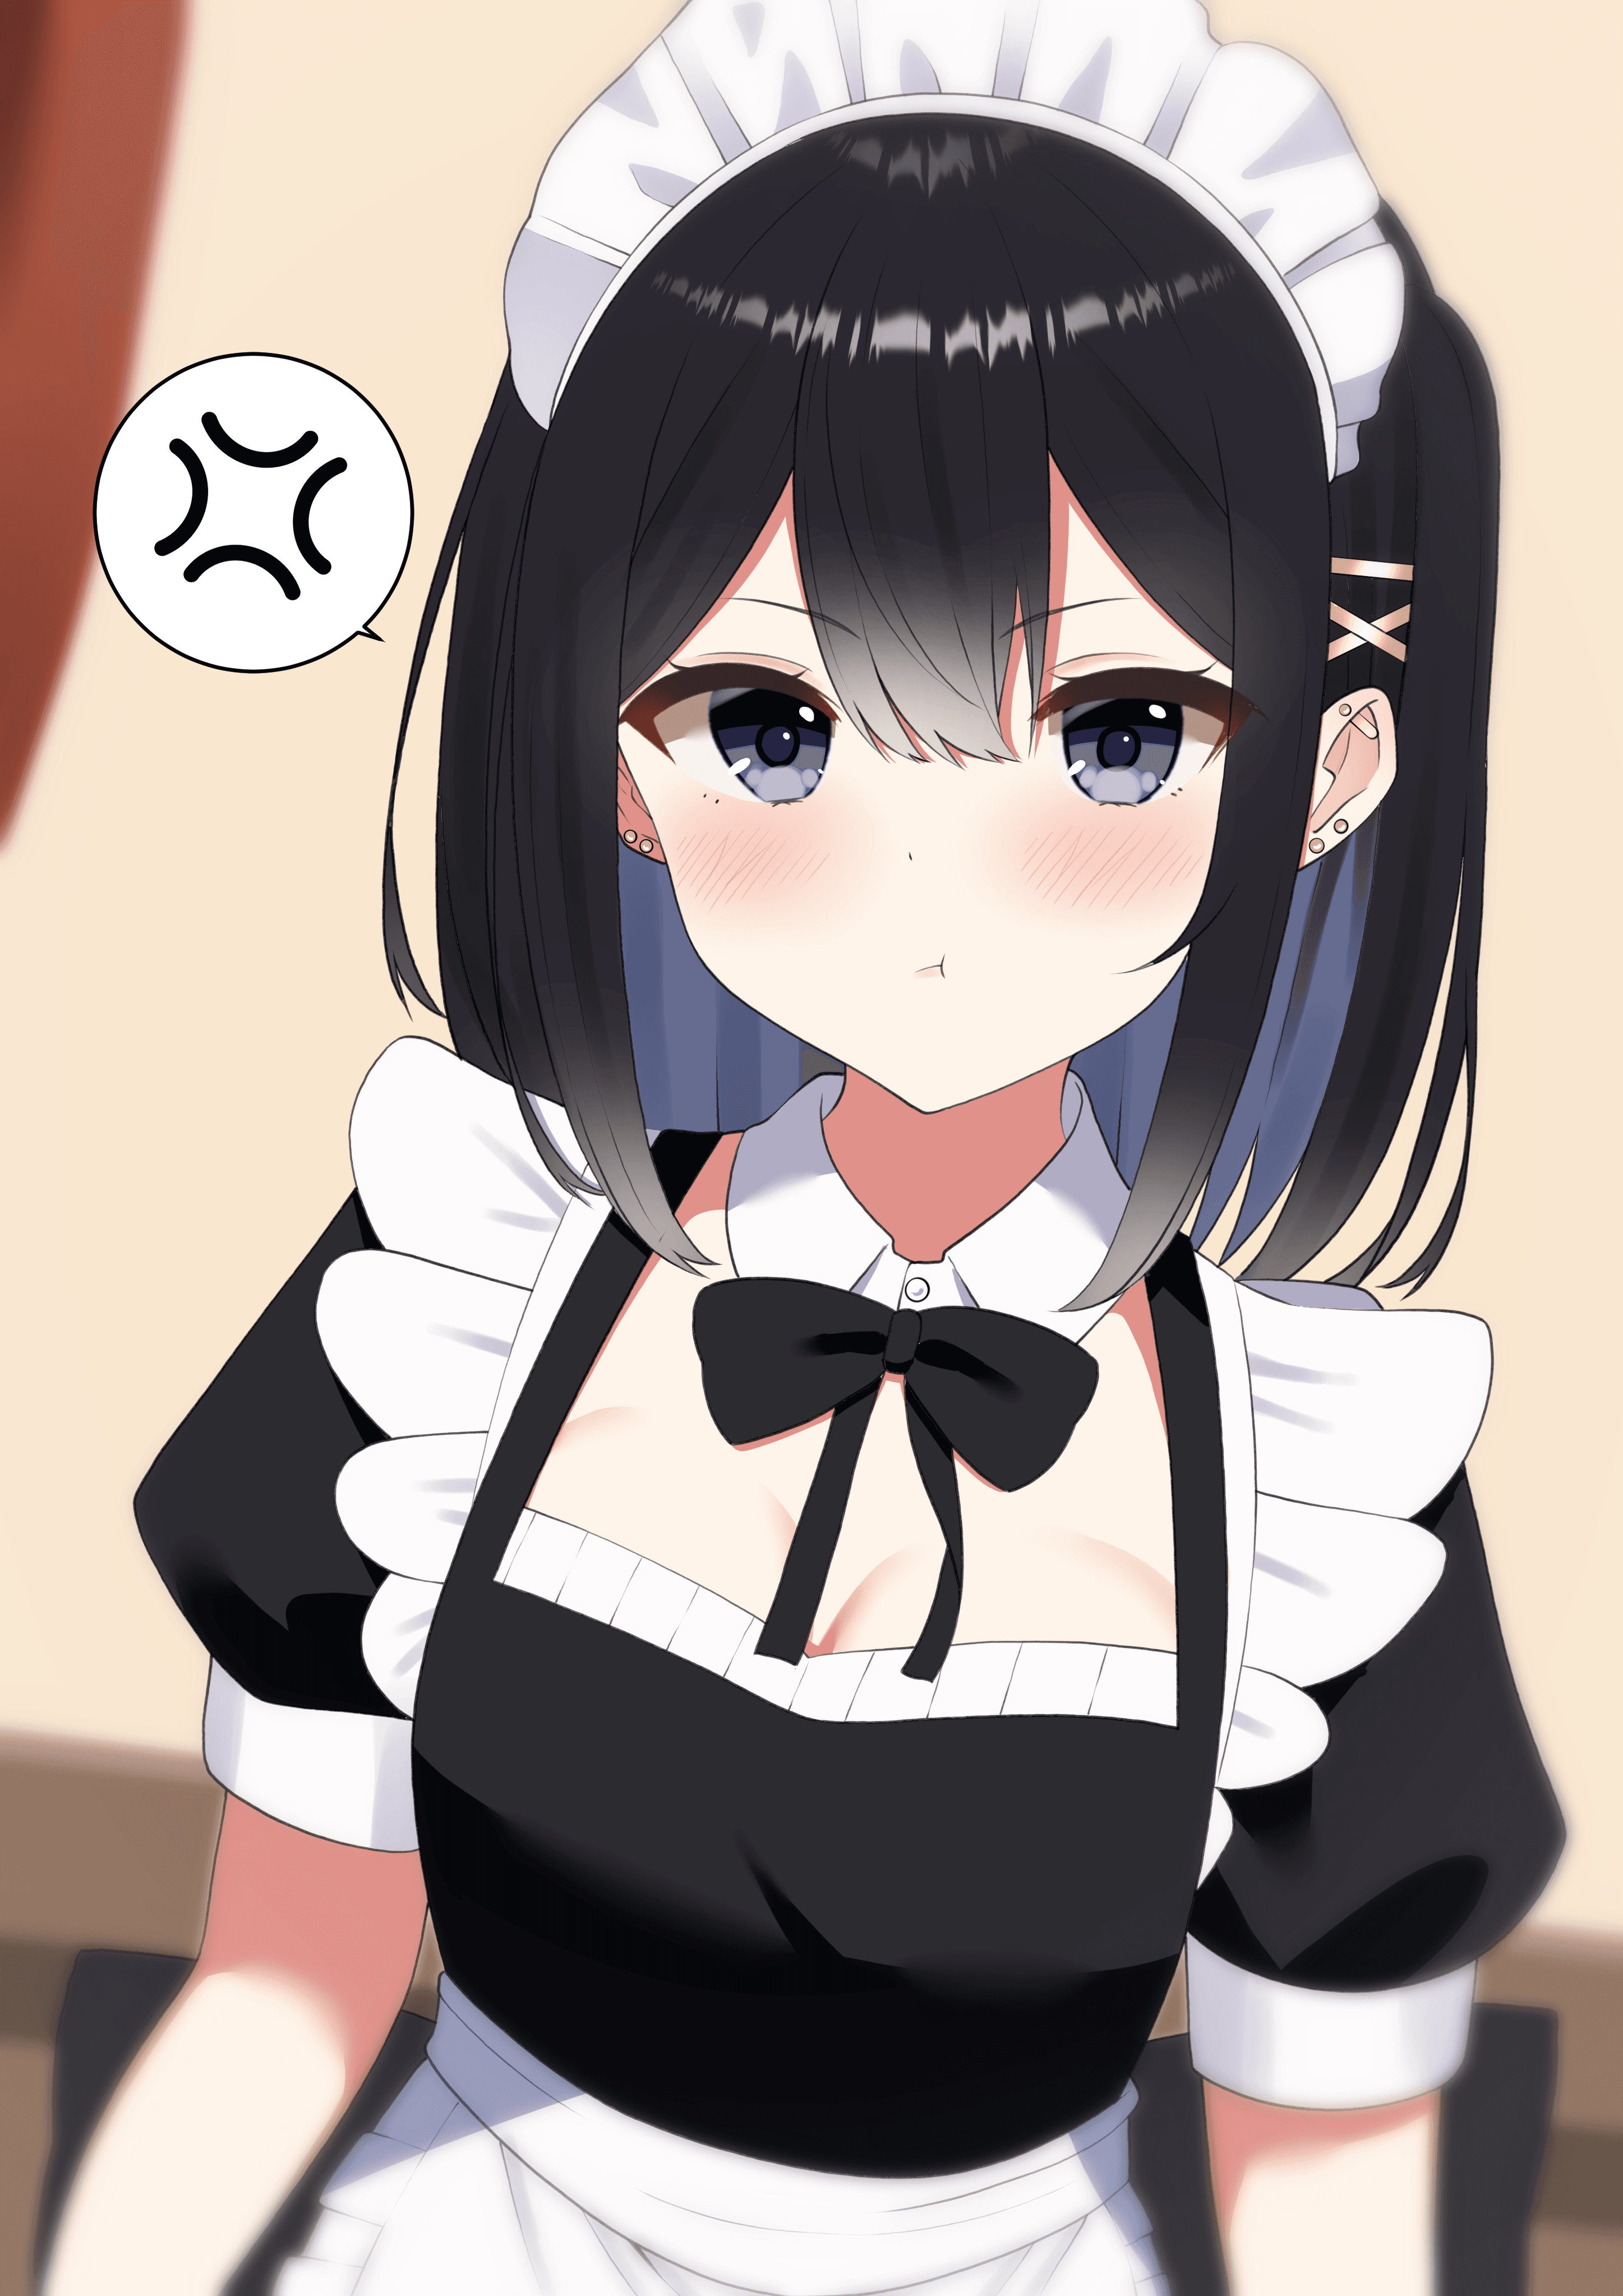 Angry maid